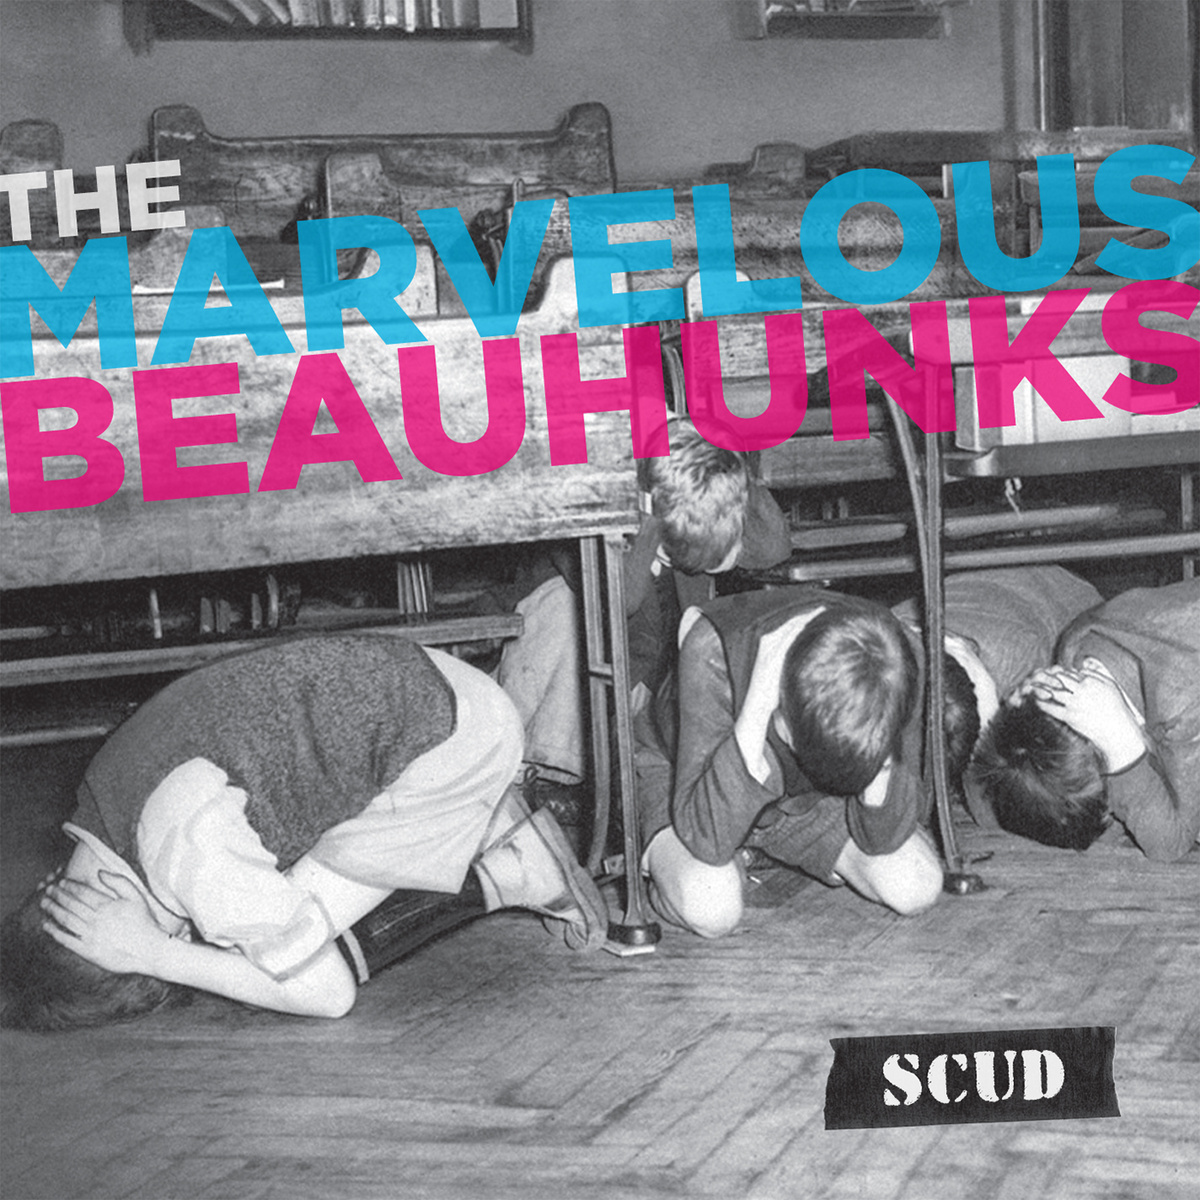 Marvelous Beauhunks SCUD